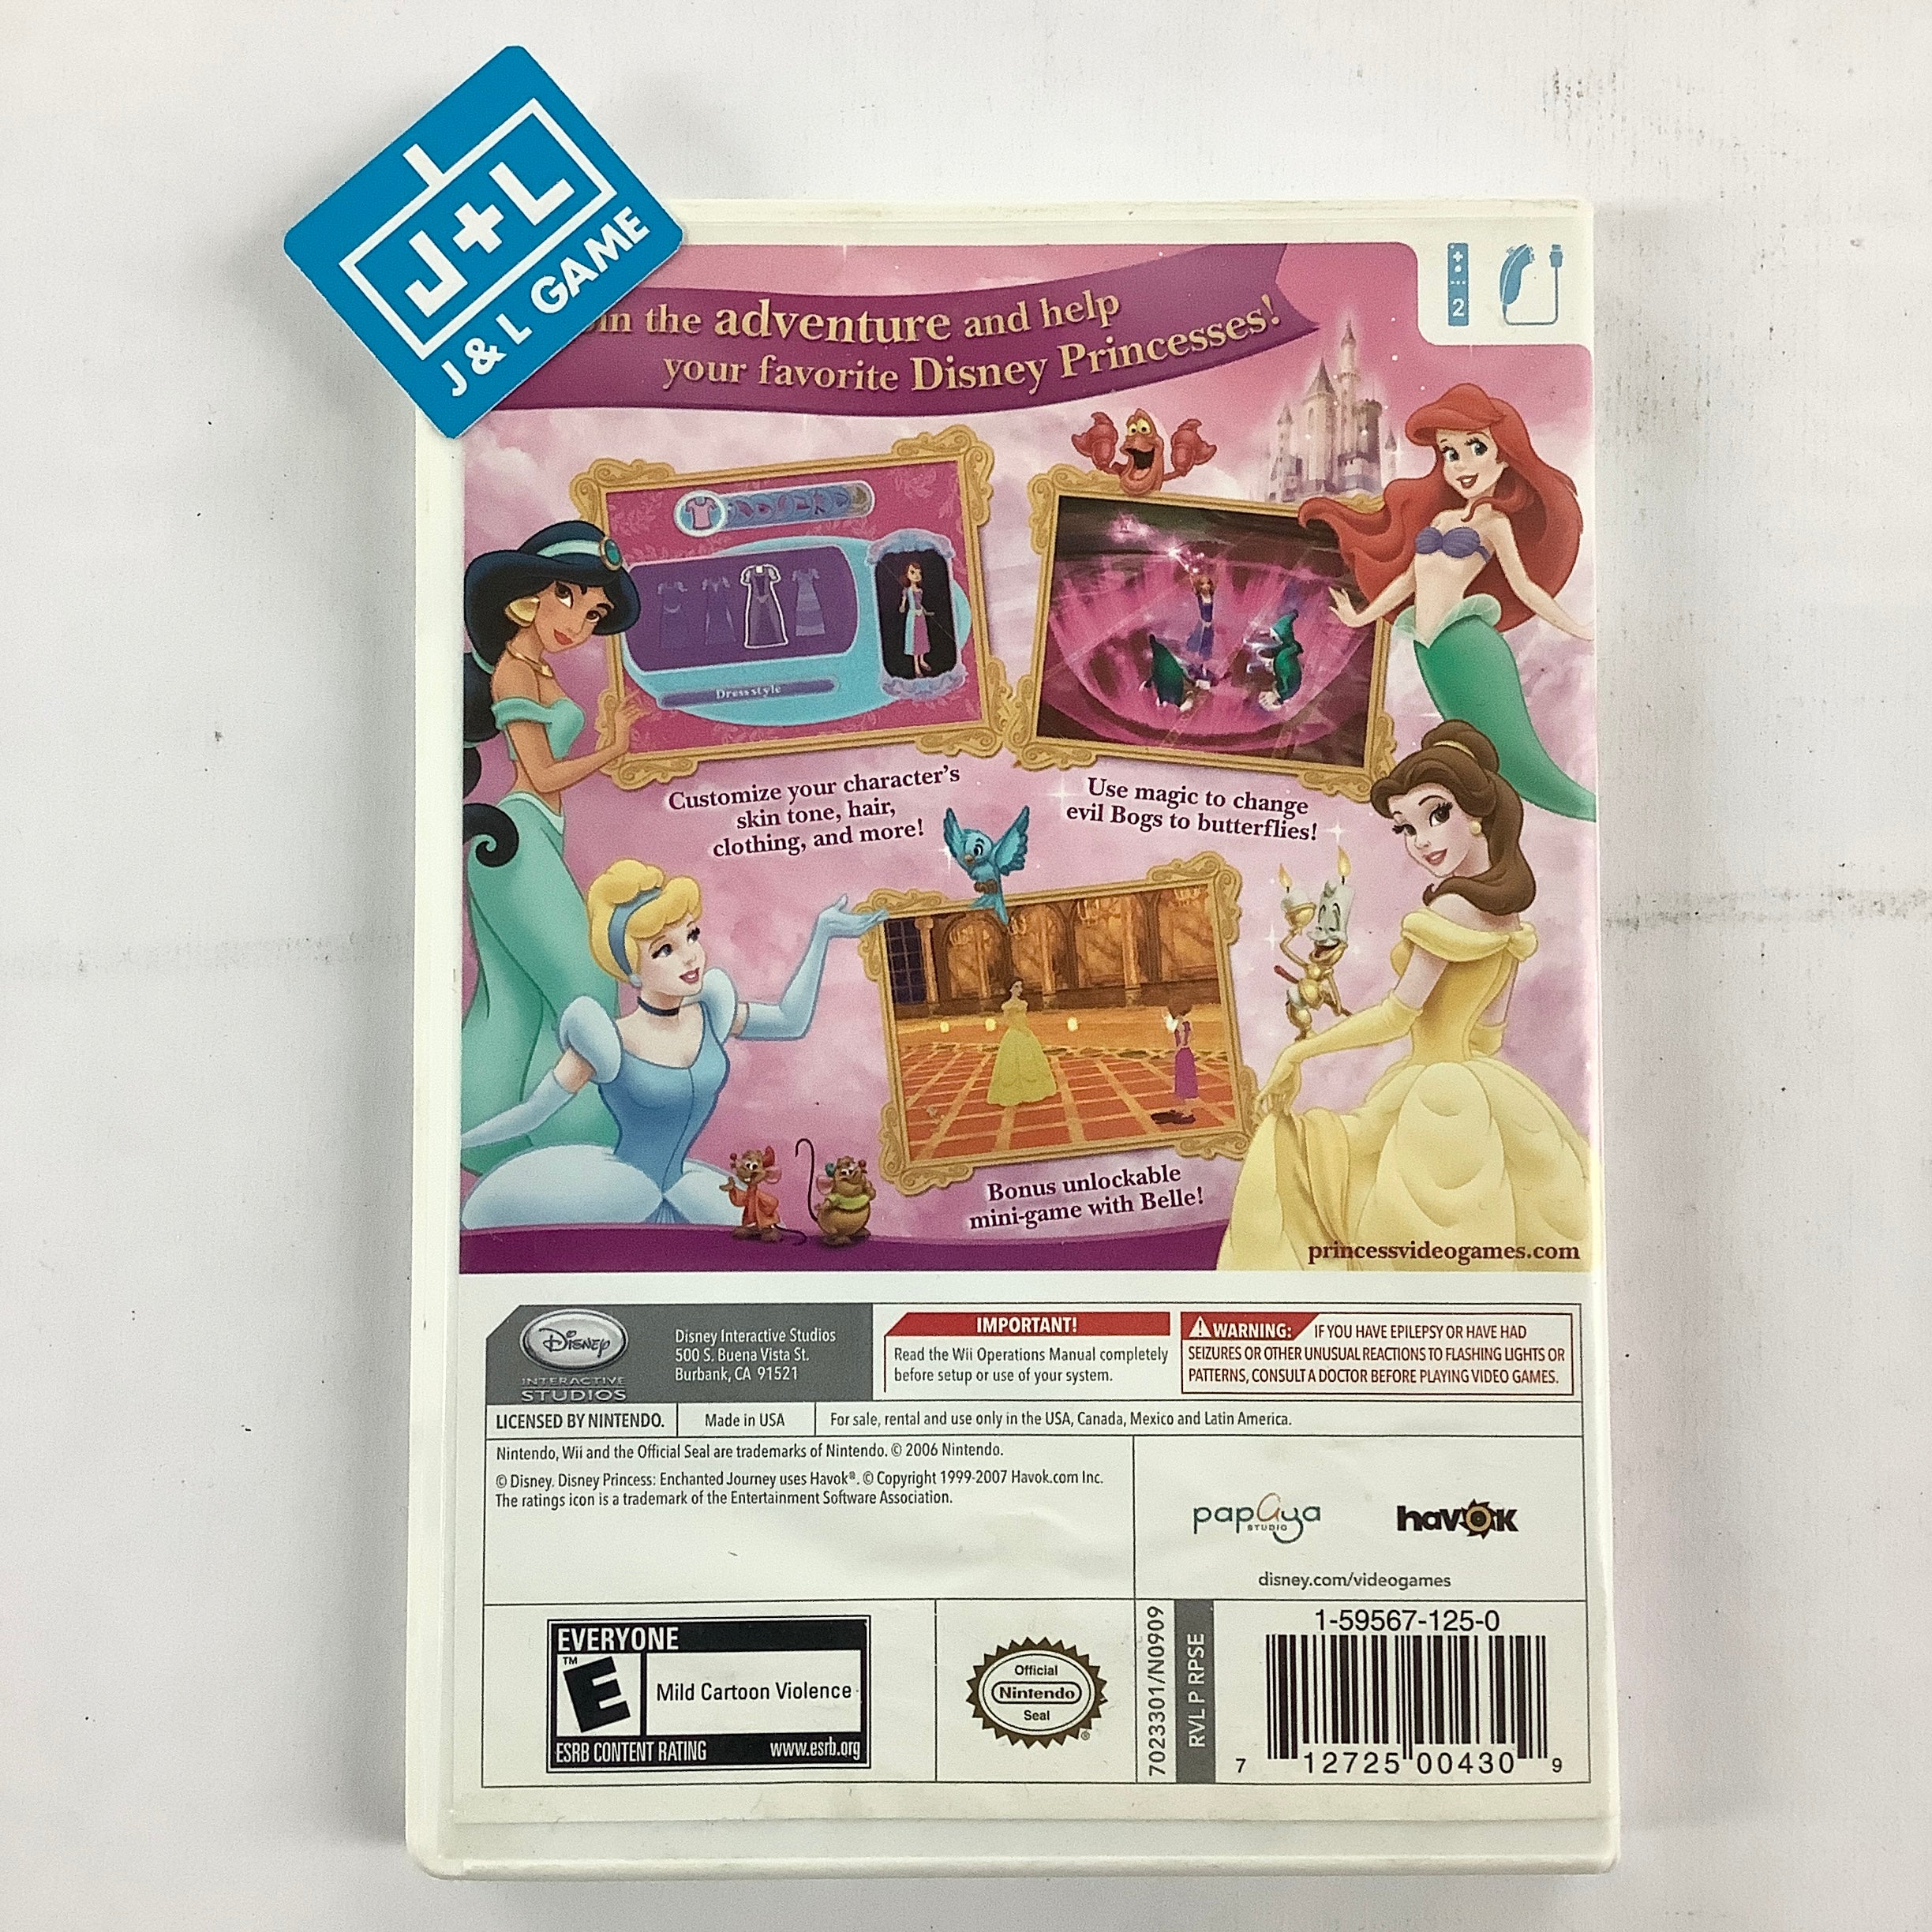 Disney Princess: Enchanted Journey - Nintendo Wii [Pre-Owned] Video Games Disney Interactive Studios   